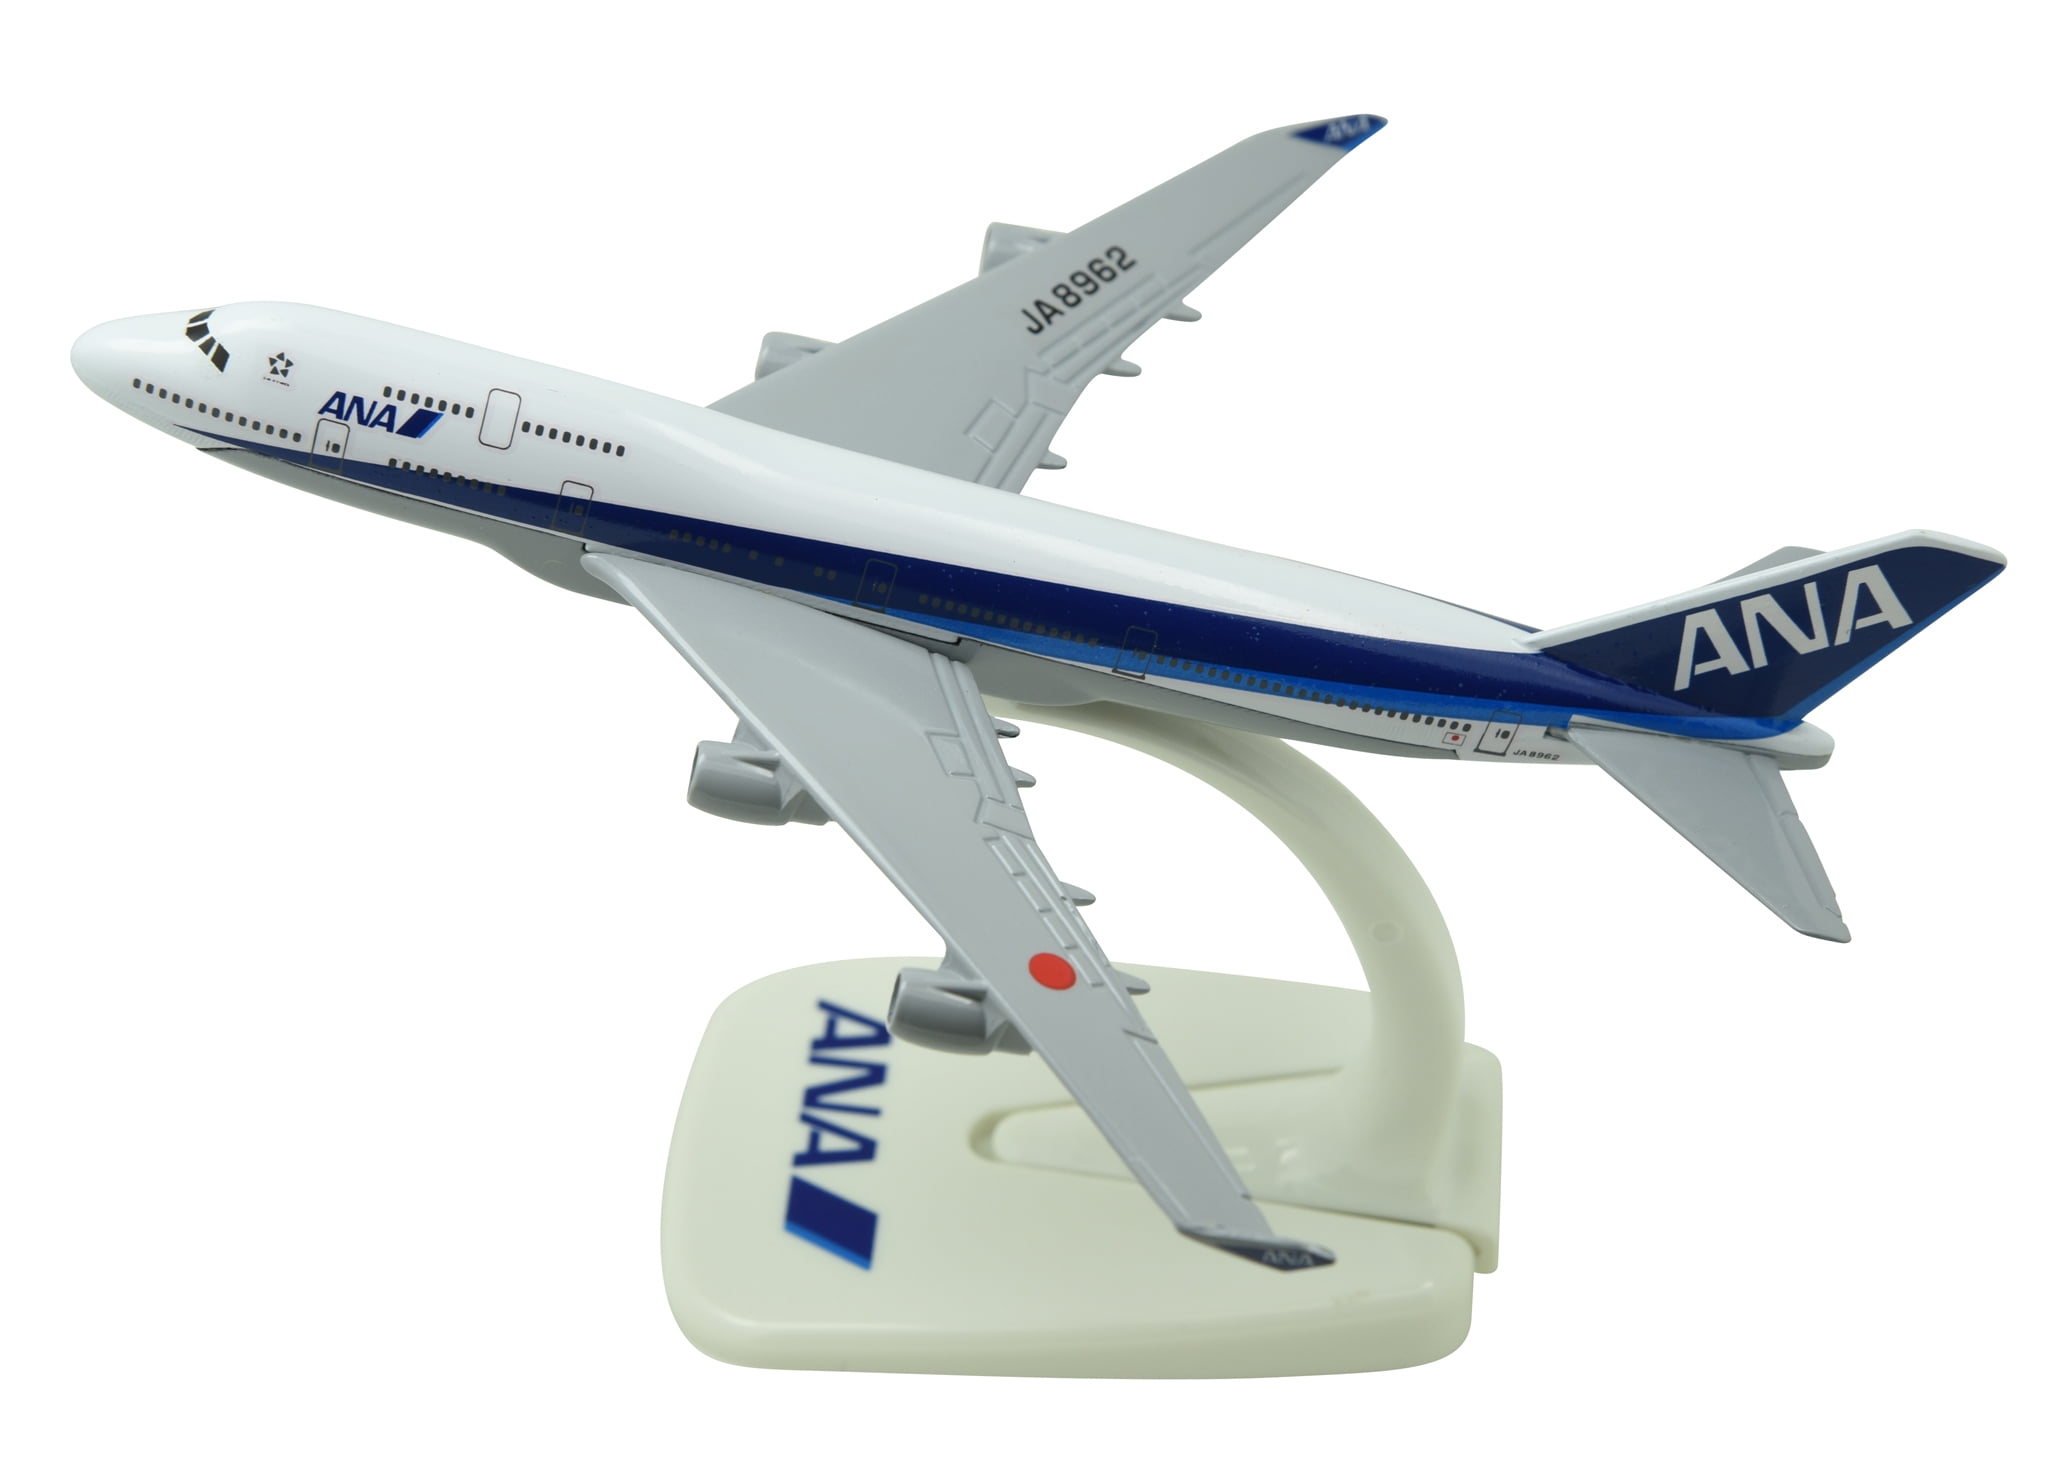 16CM AIRBUS A380 METAL PLANE MODEL AEROPLANE AIRWAYS AIRLINE JUMBO JET TOYS BIG 